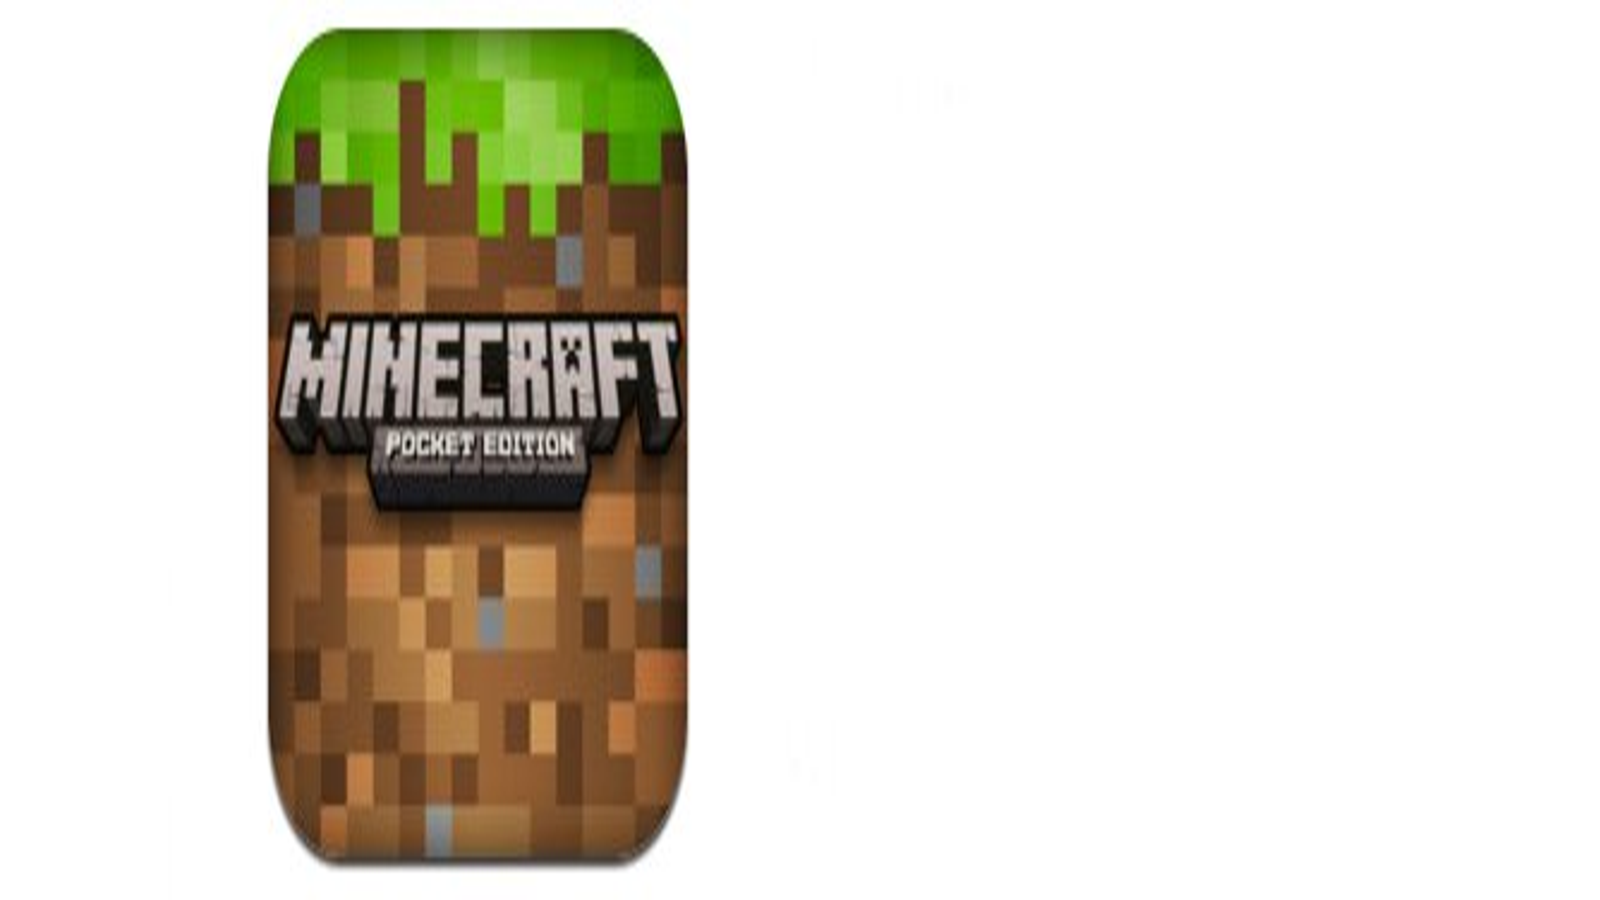 Minecraft Pocket Edition updated to Version 0.3.0